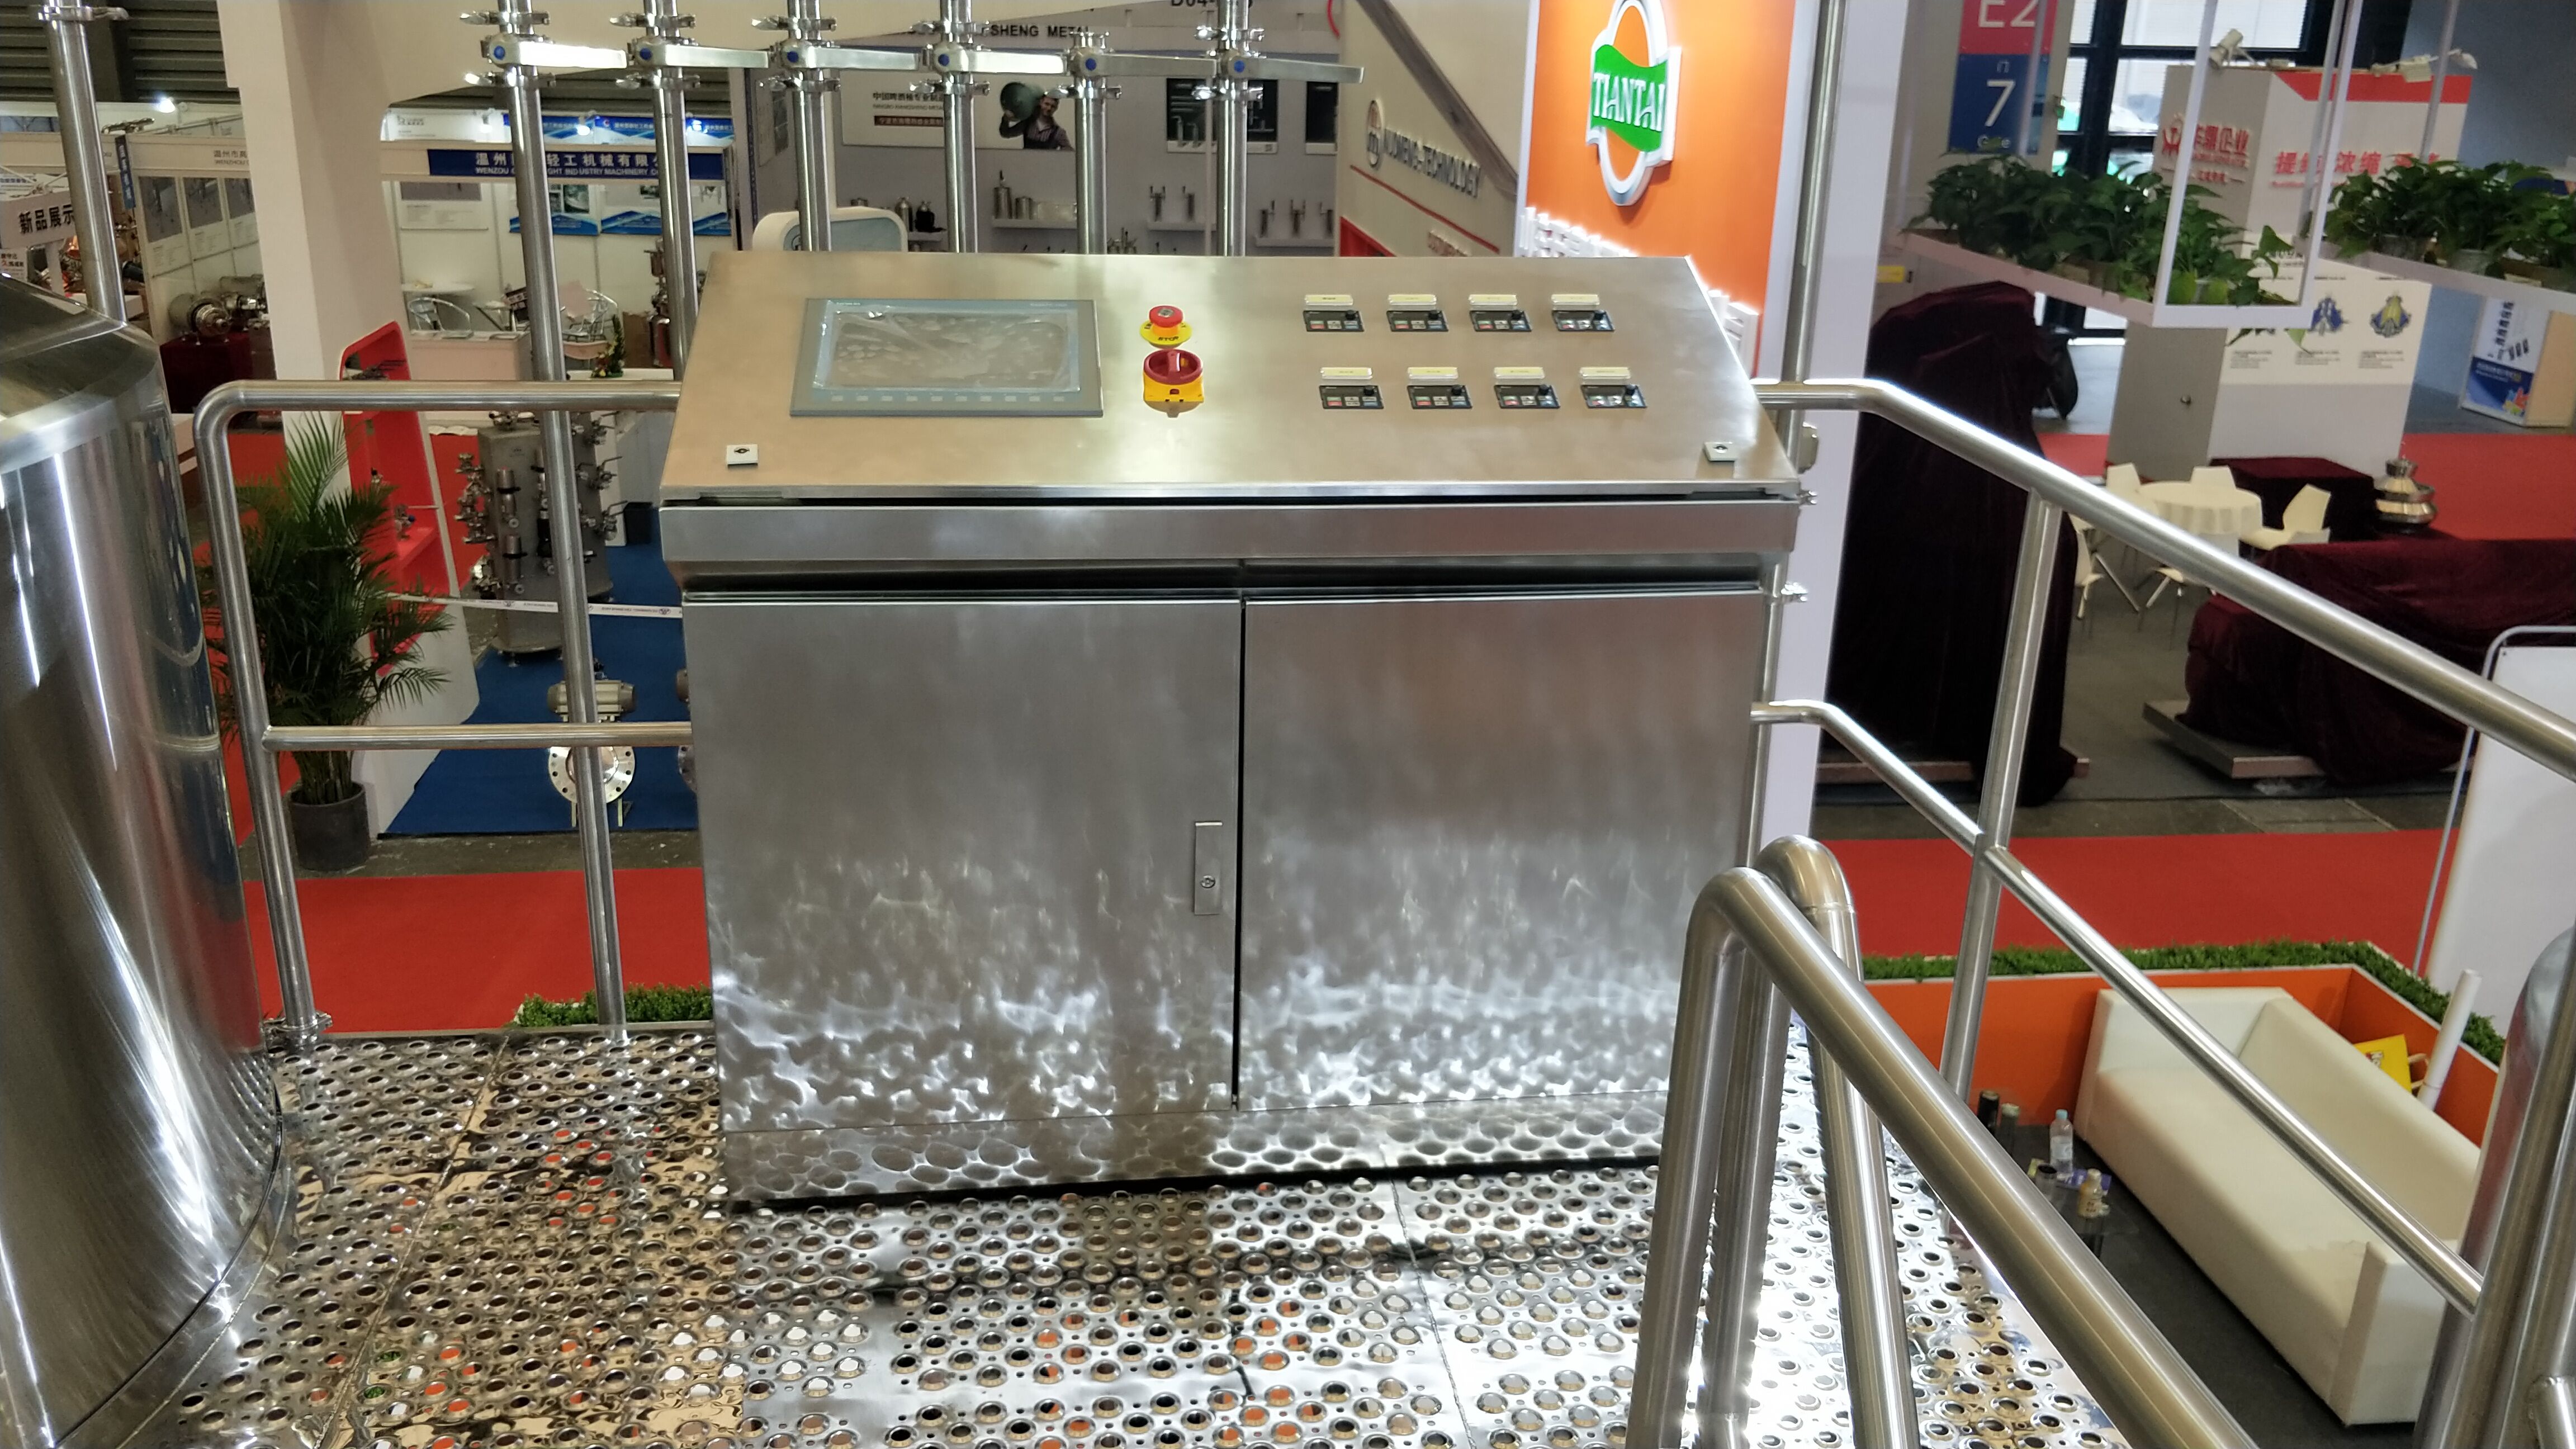 <b>Tiantai Brewery Control Cabinet System</b>